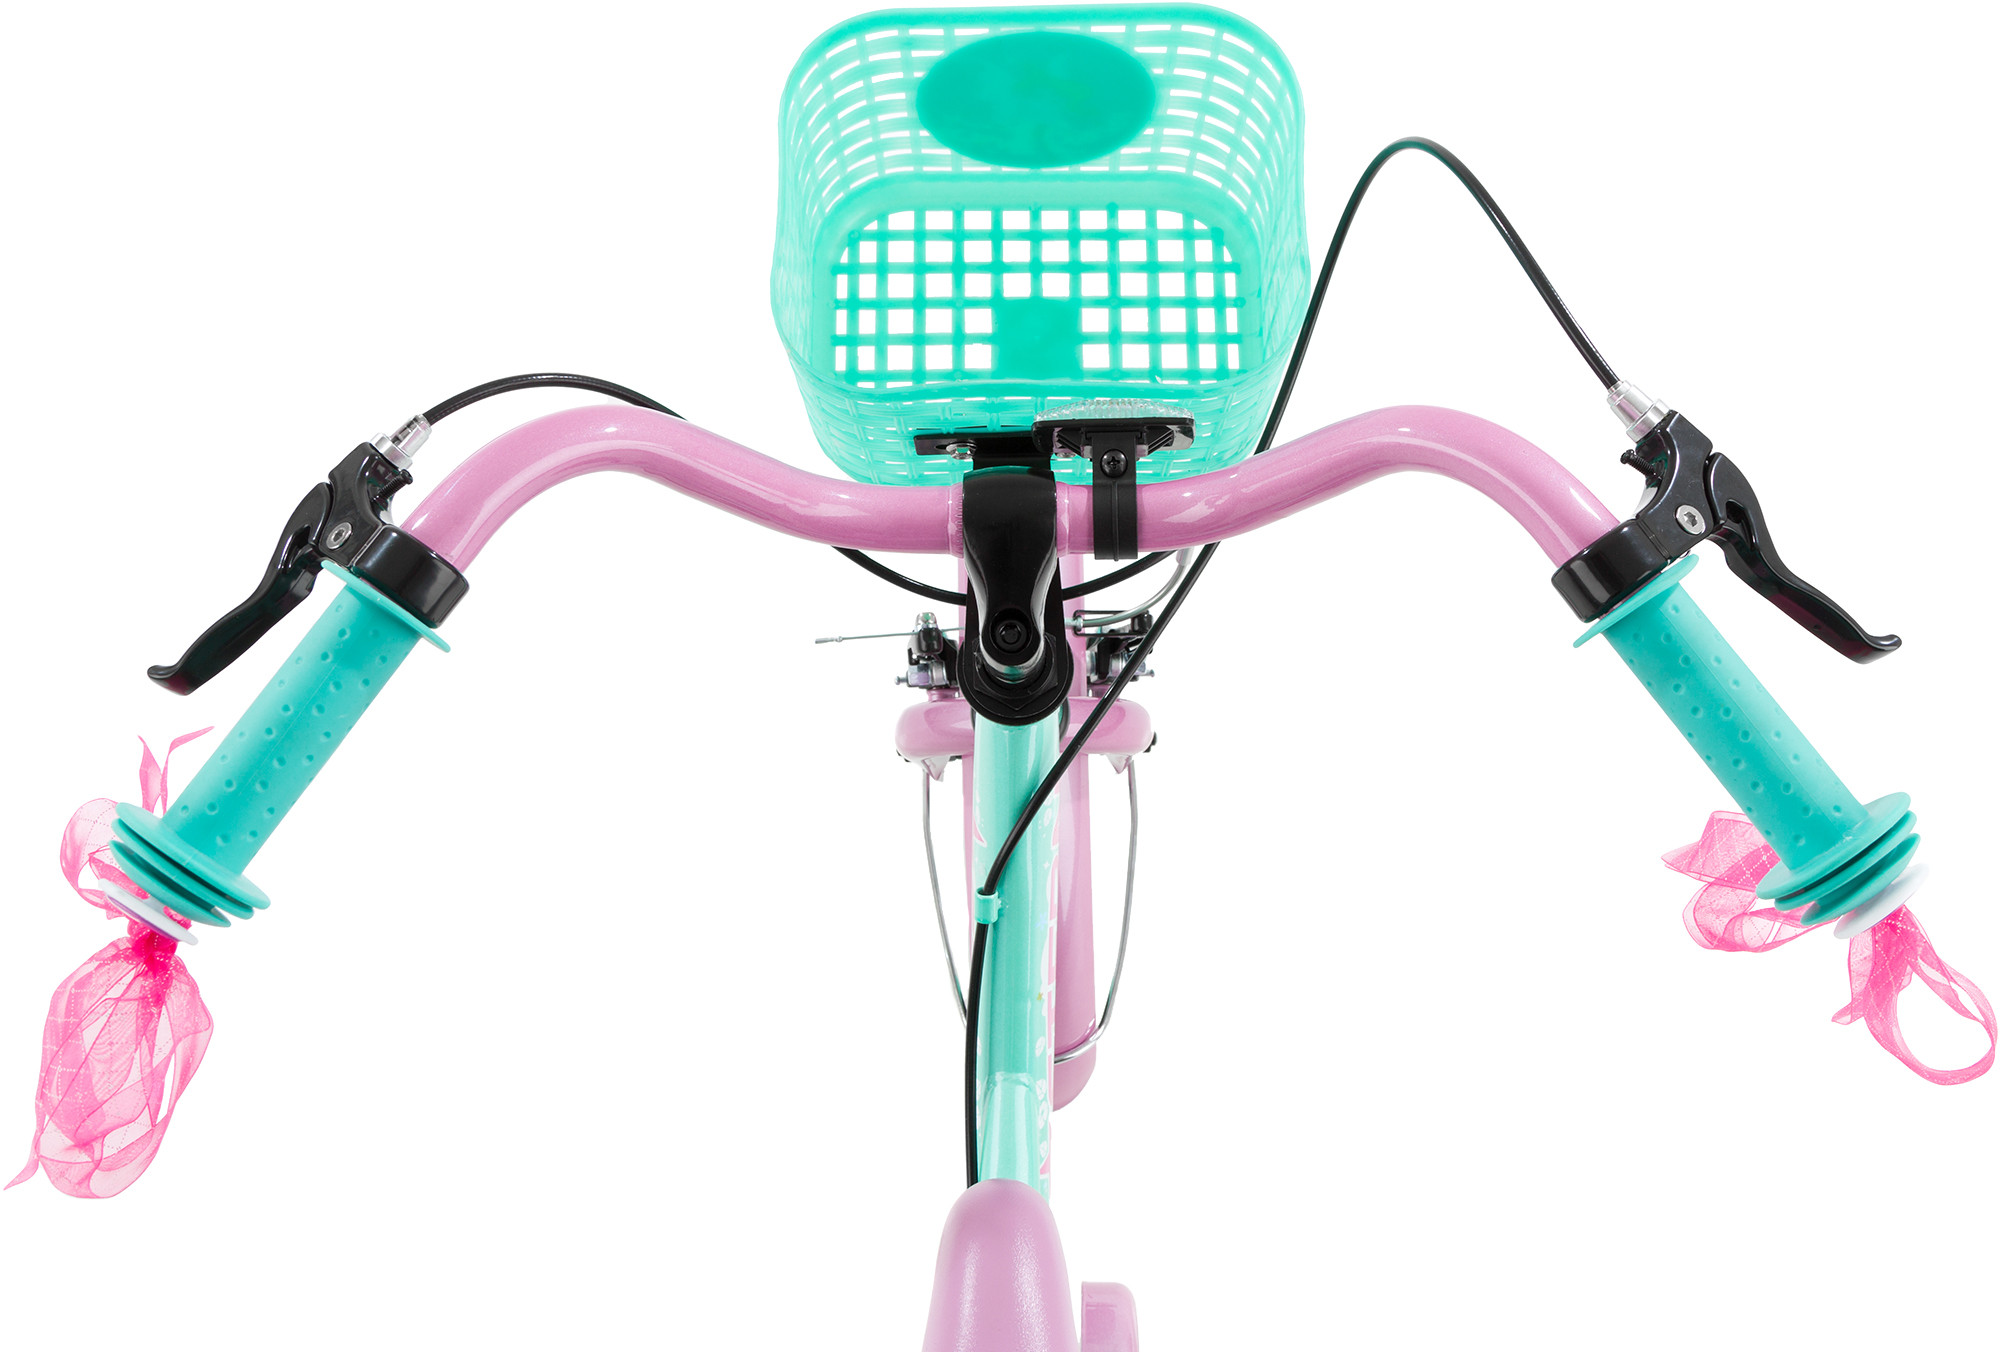 Велосипед для девочек Stern Vicky 14"